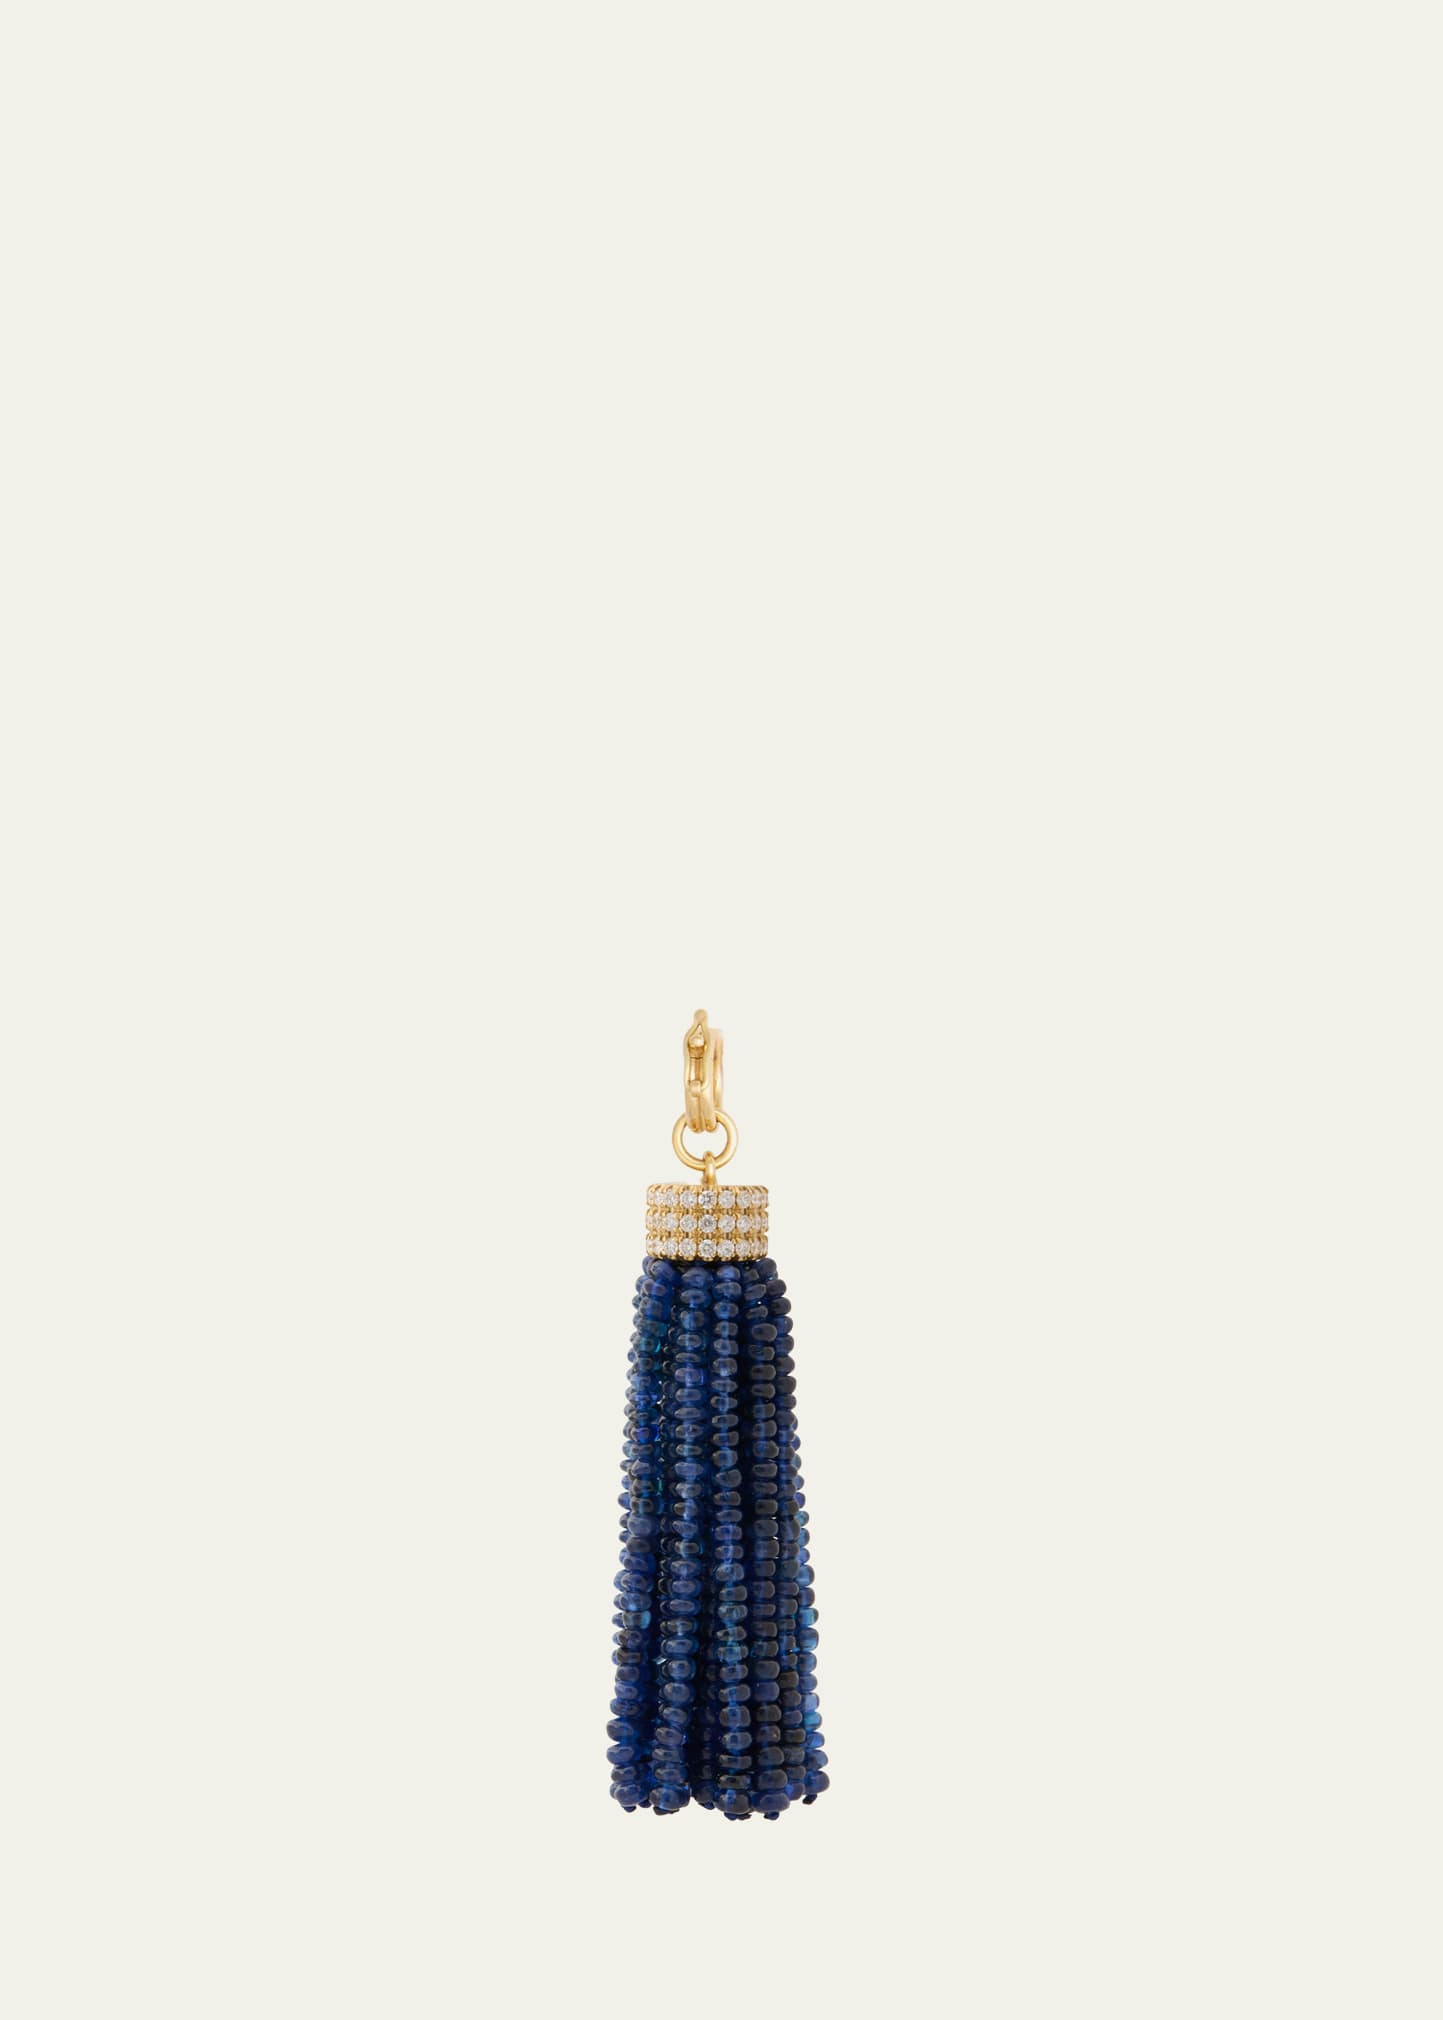 18K Yellow Gold Blue Sapphire Tassel Pendant with Triple Diamond Cap